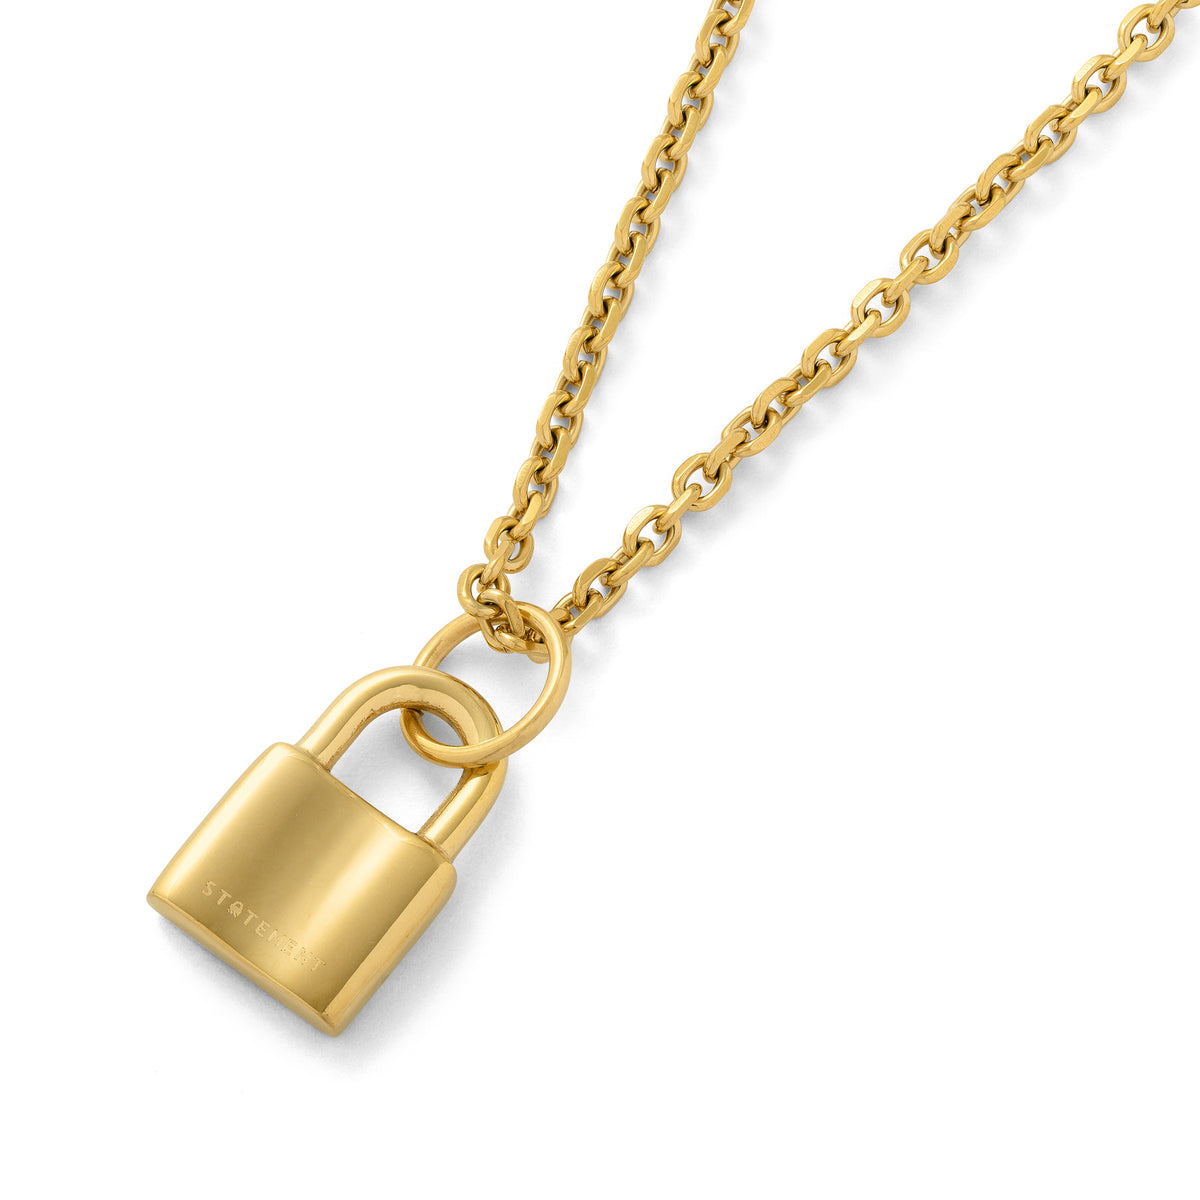 Gold mini padlock pendant by STATEMENT